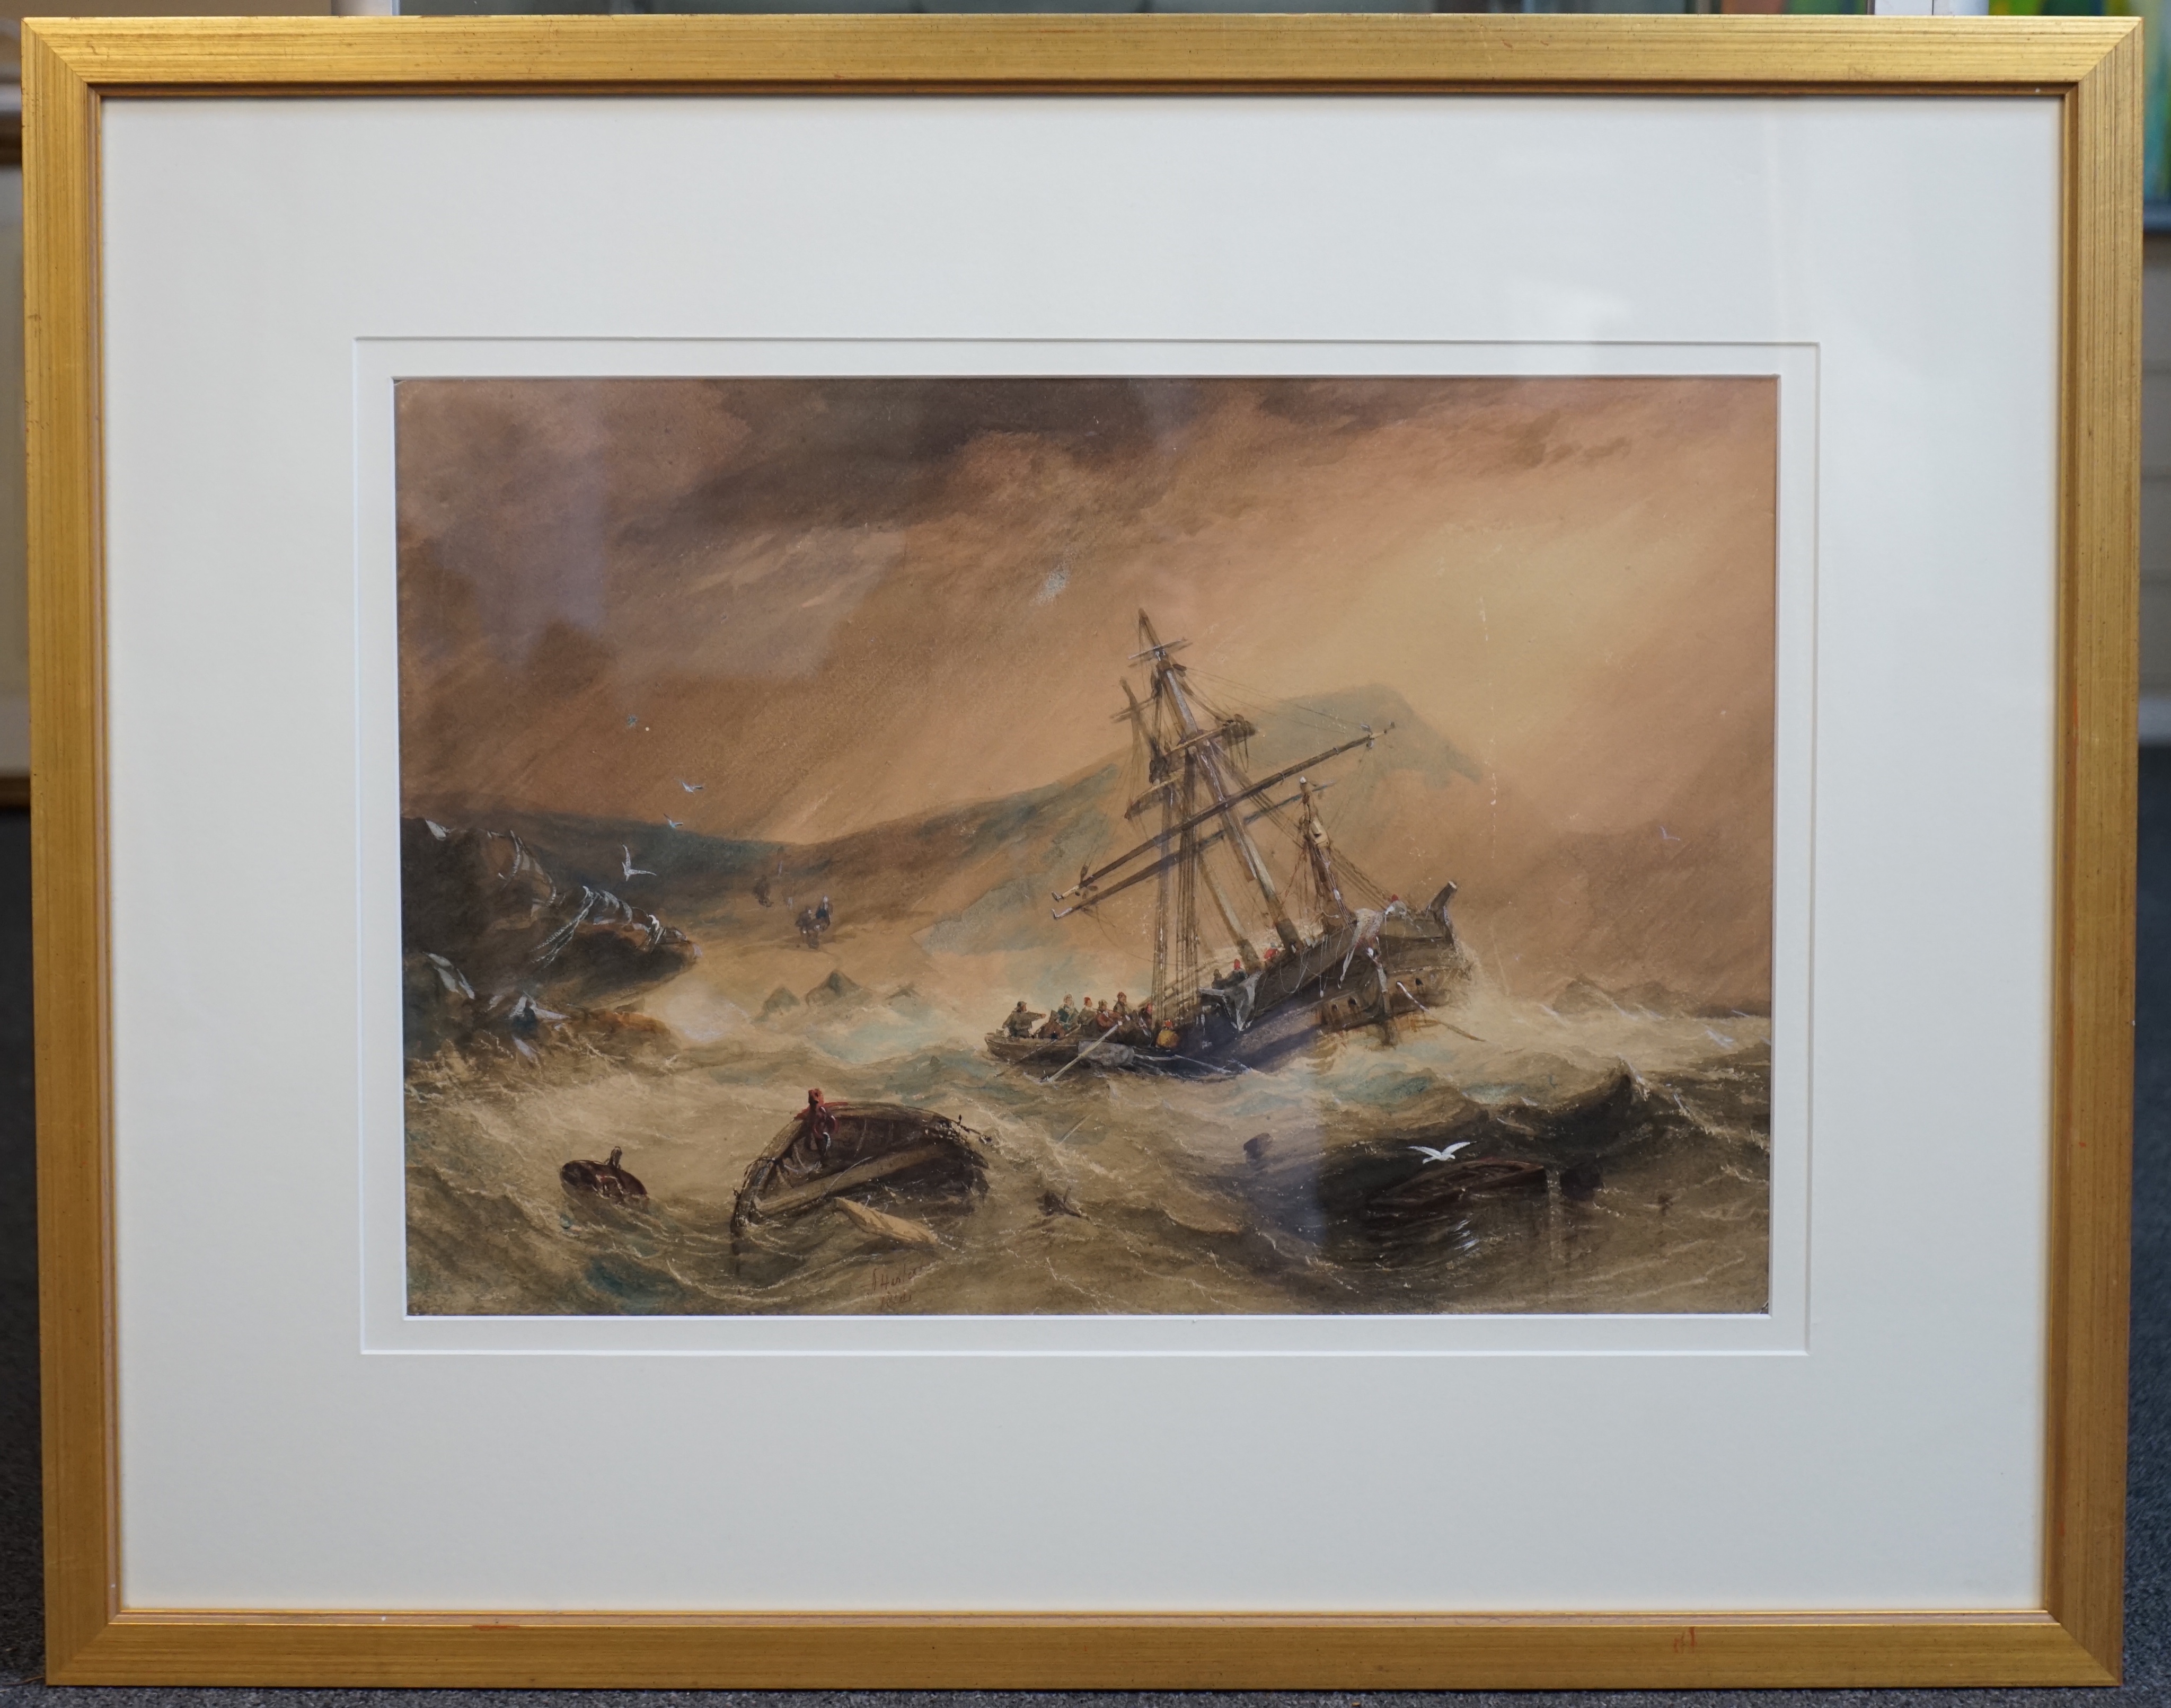 Alfred Herbert (1818-1861), 'The Ship Wreck', watercolour, 33 x 49cm